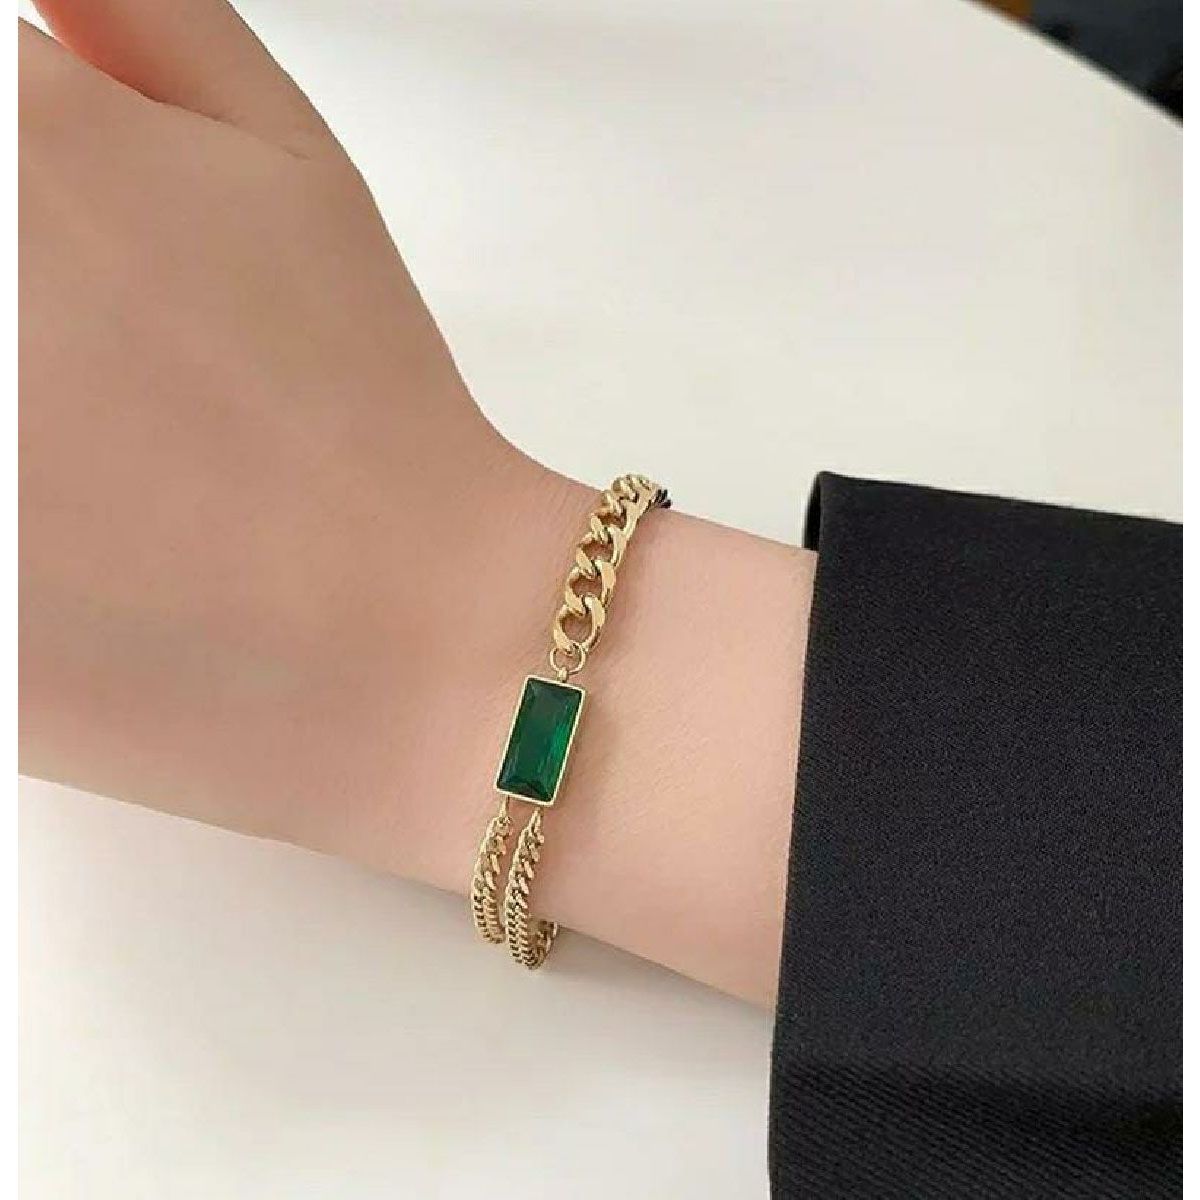 Unido Curb Chain Emerald Shaker Bracelet in 18k gold - Moritz Glik